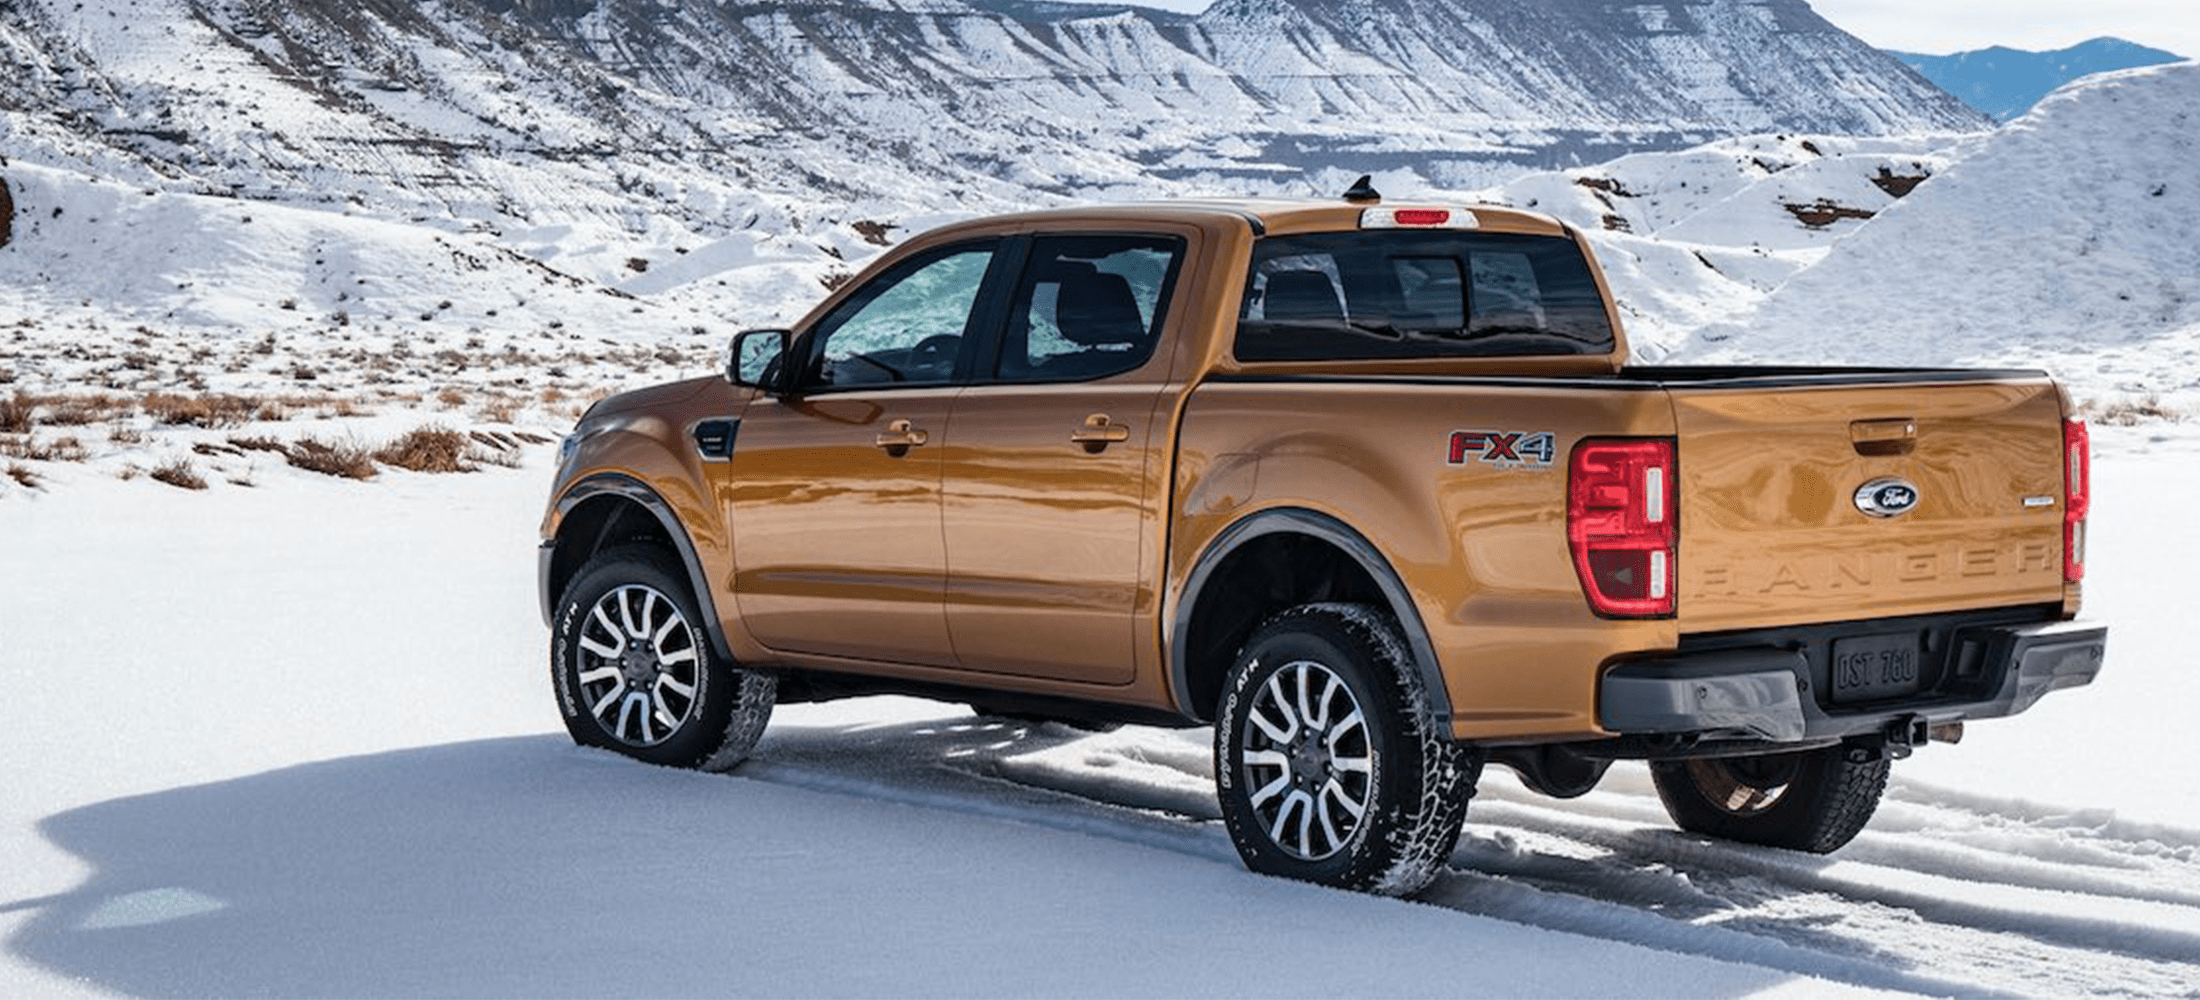 Ford Ranger 2019 Abenteuer